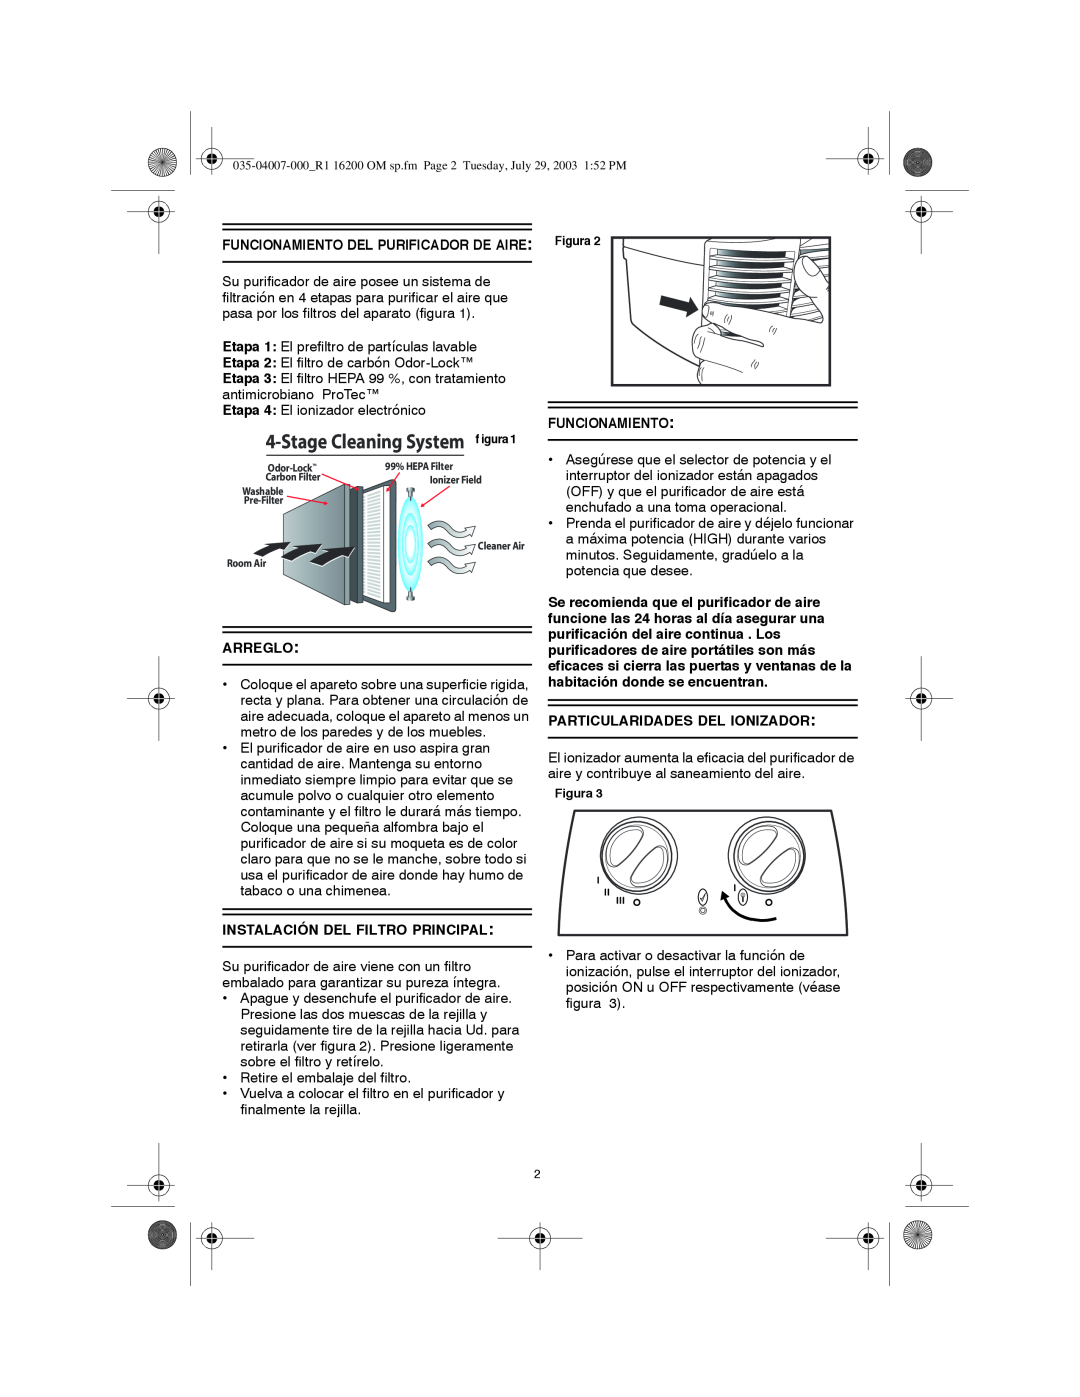 Honeywell 16200 important safety instructions StageCleaning System f igura, Funcionamiento Del Purificador De Aire, Arreglo 